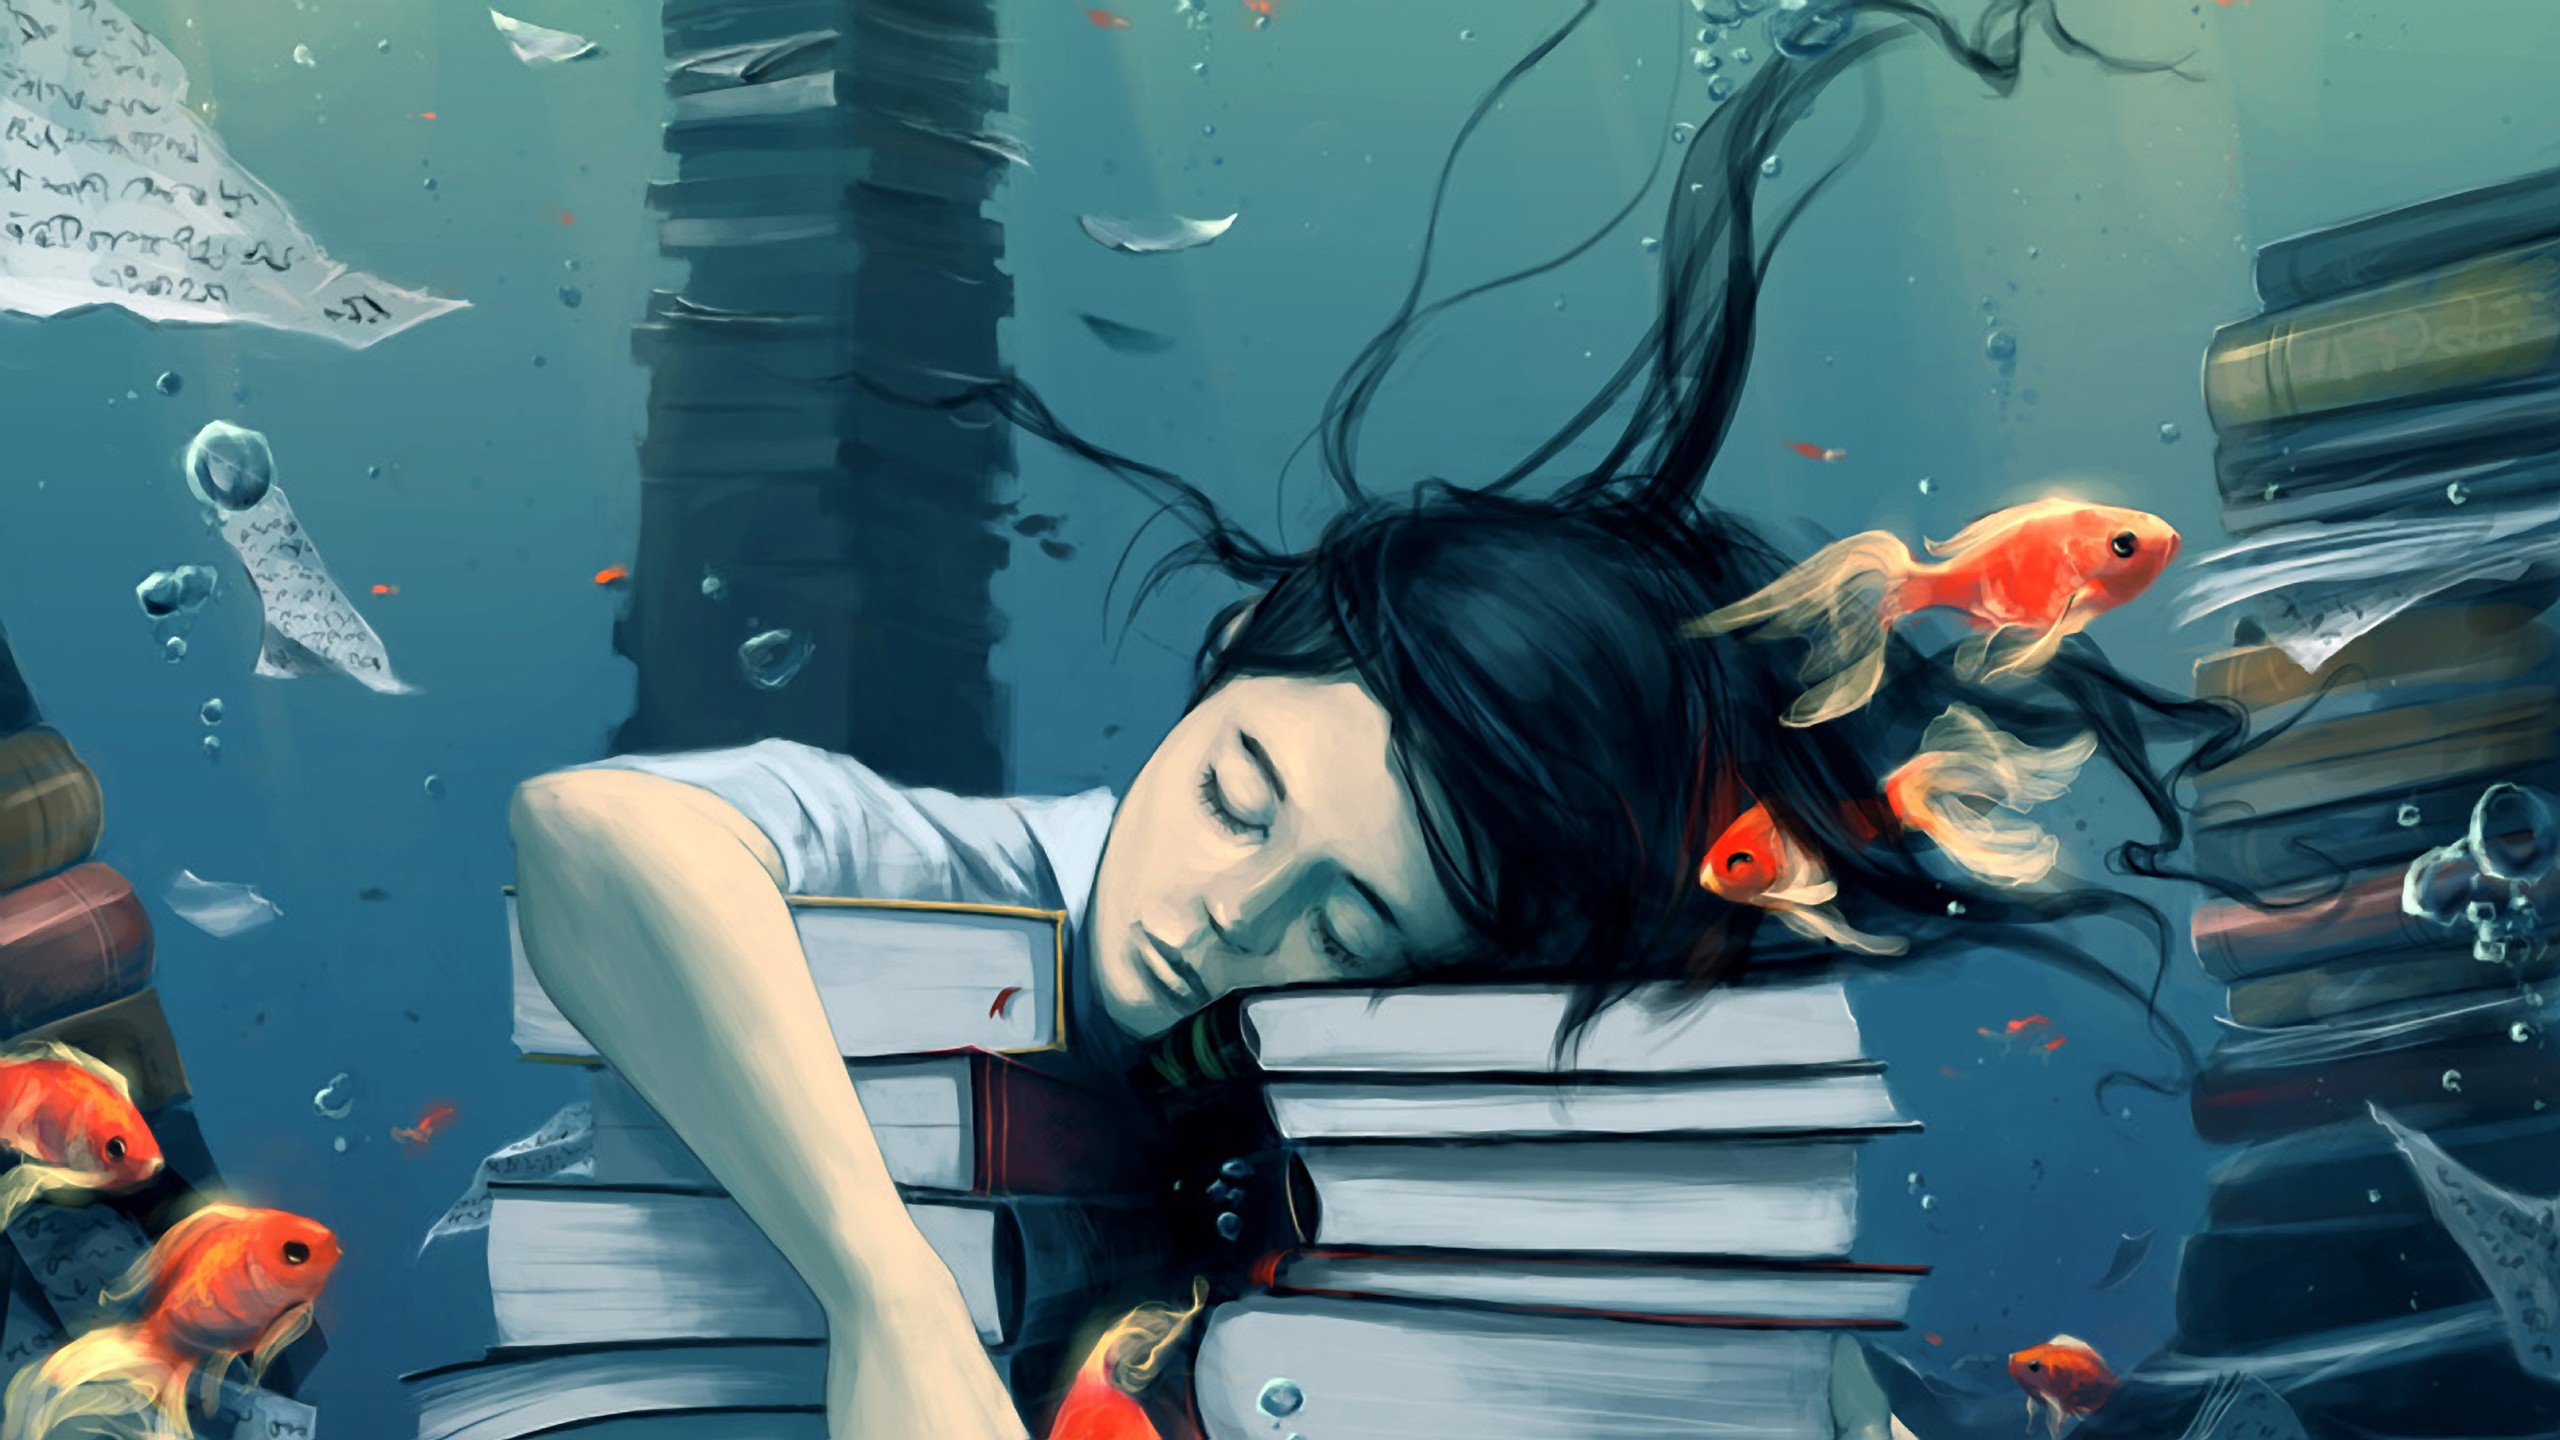 Books Fish Bubbles Closed Eyes Paper Underwater AquaSixio Artwork Original Characters Fantasy Art Go 2560x1440